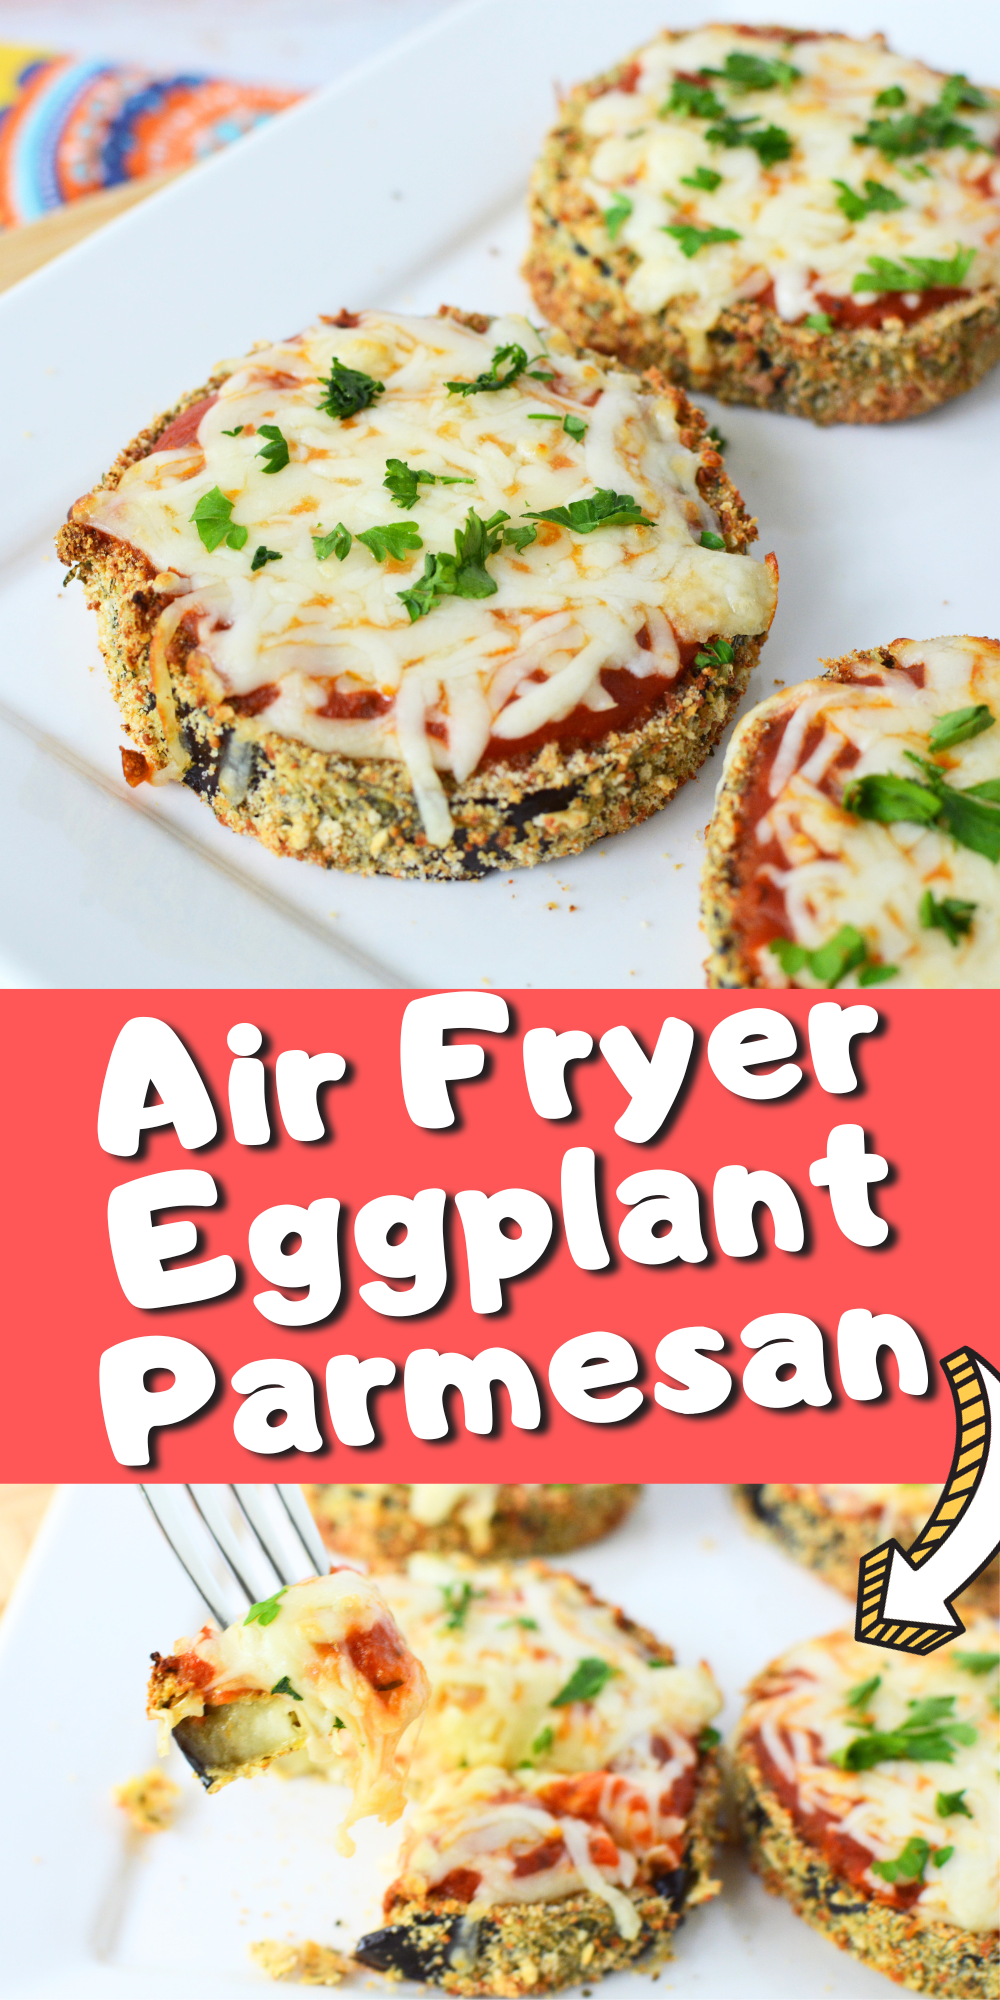 Air Fryer Eggplant Parmesan